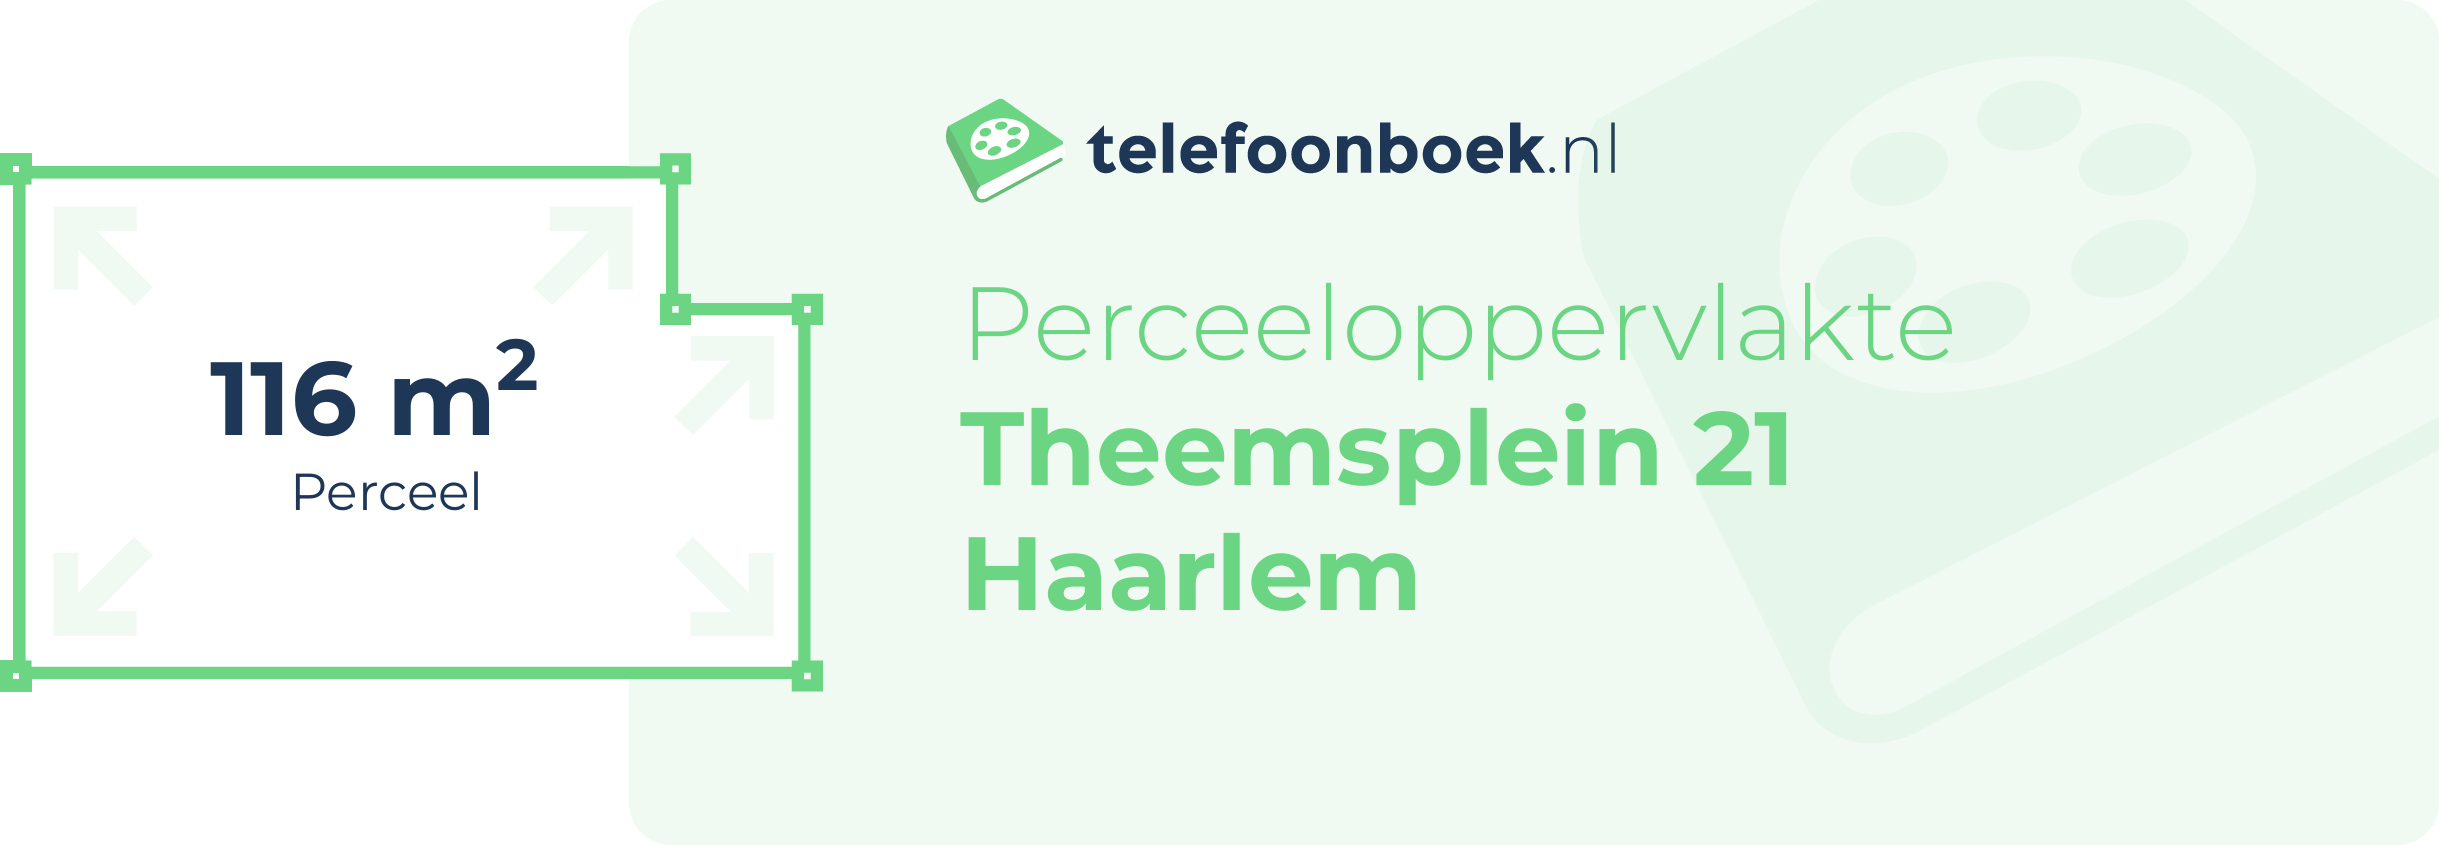 Perceeloppervlakte Theemsplein 21 Haarlem